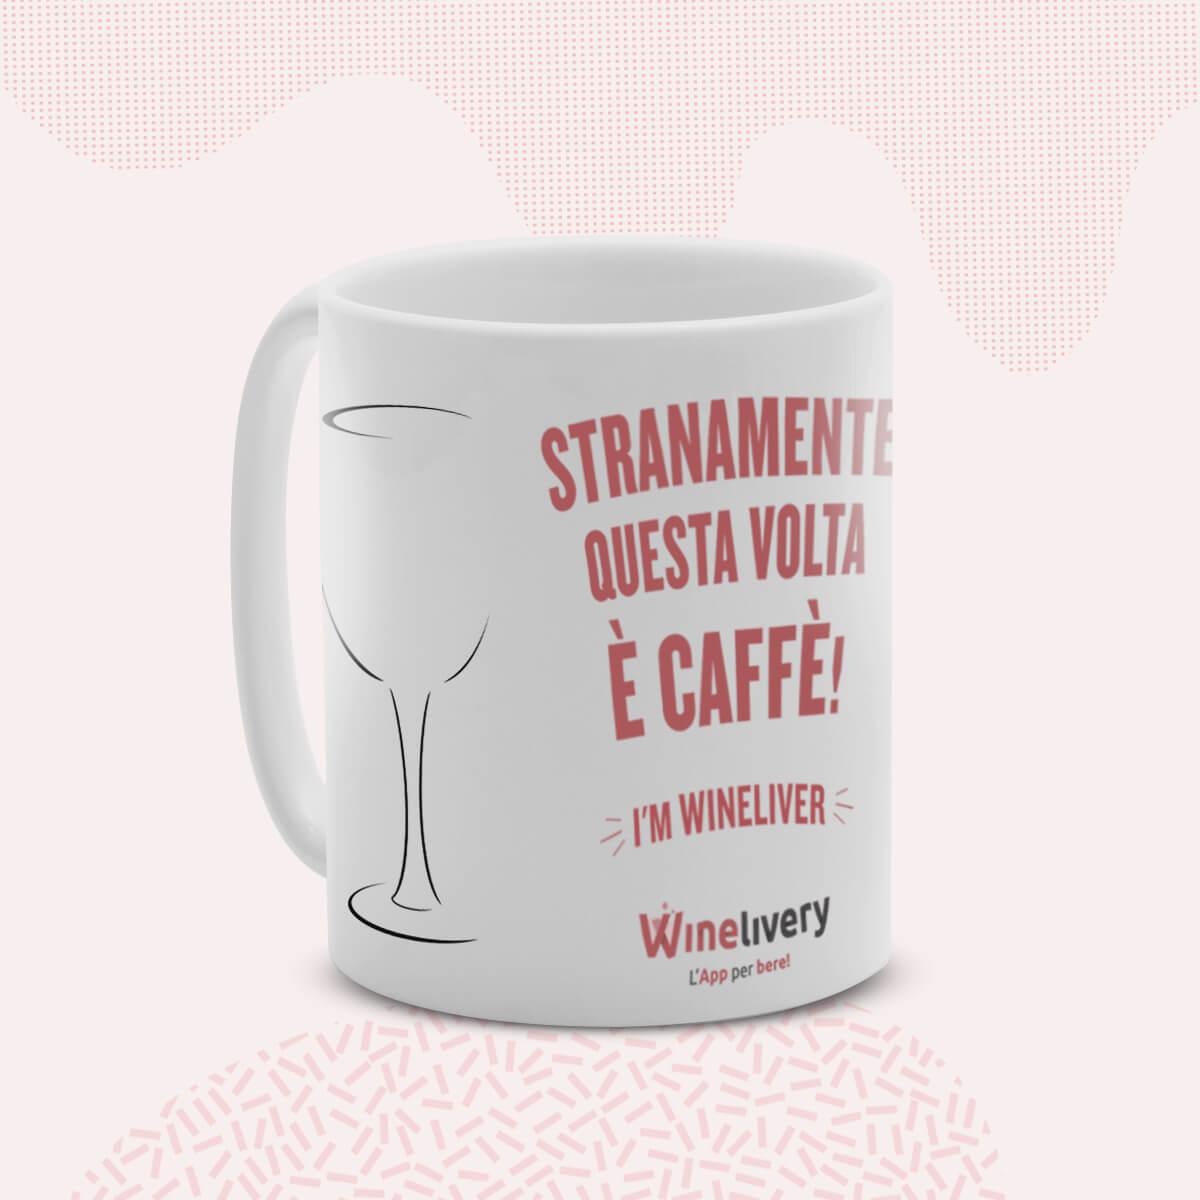 Winelivery mug